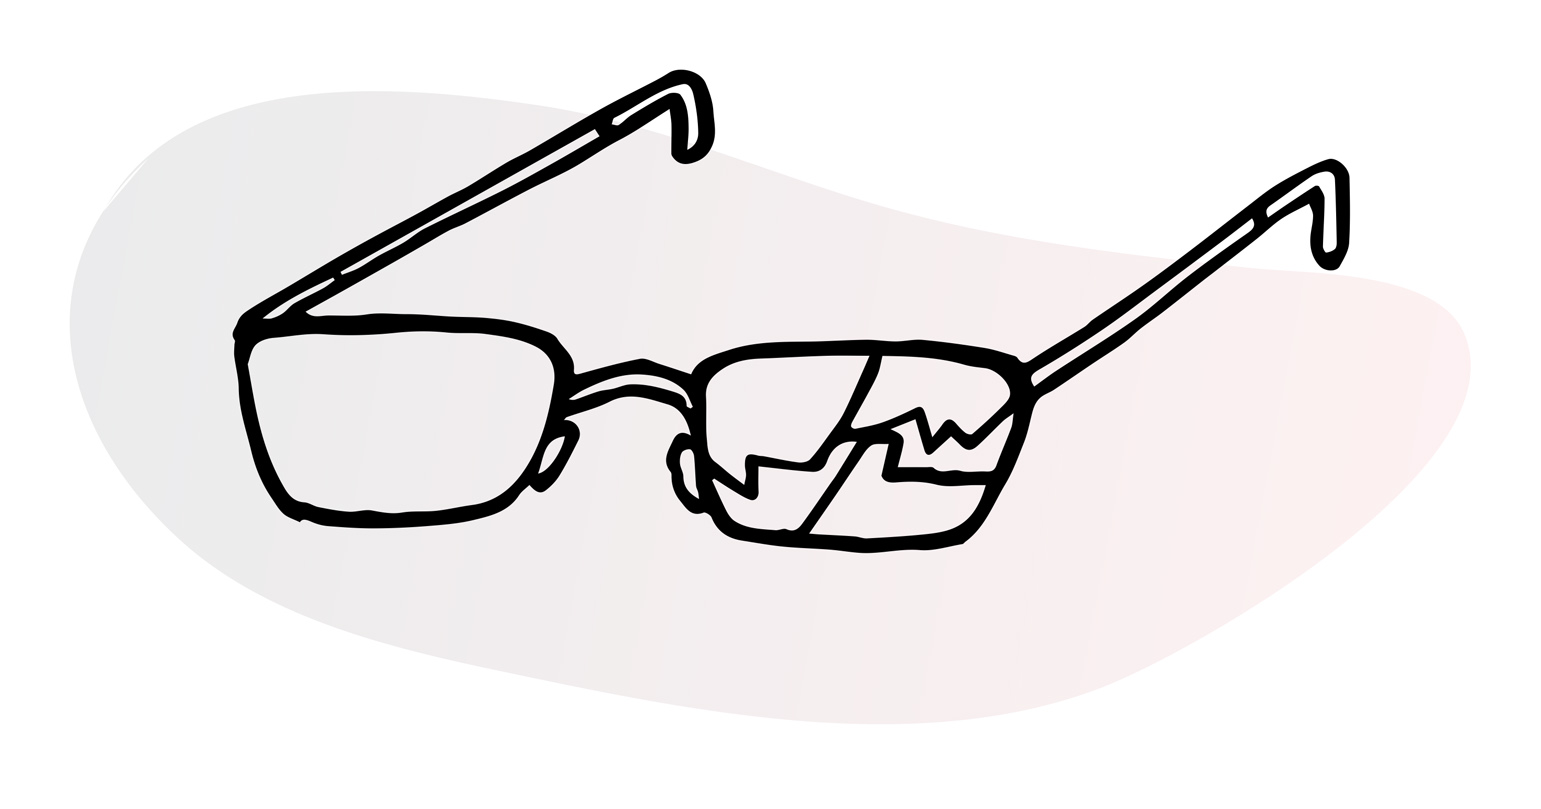 Line illustration of eyeglasses, one of its lenses severely cracked